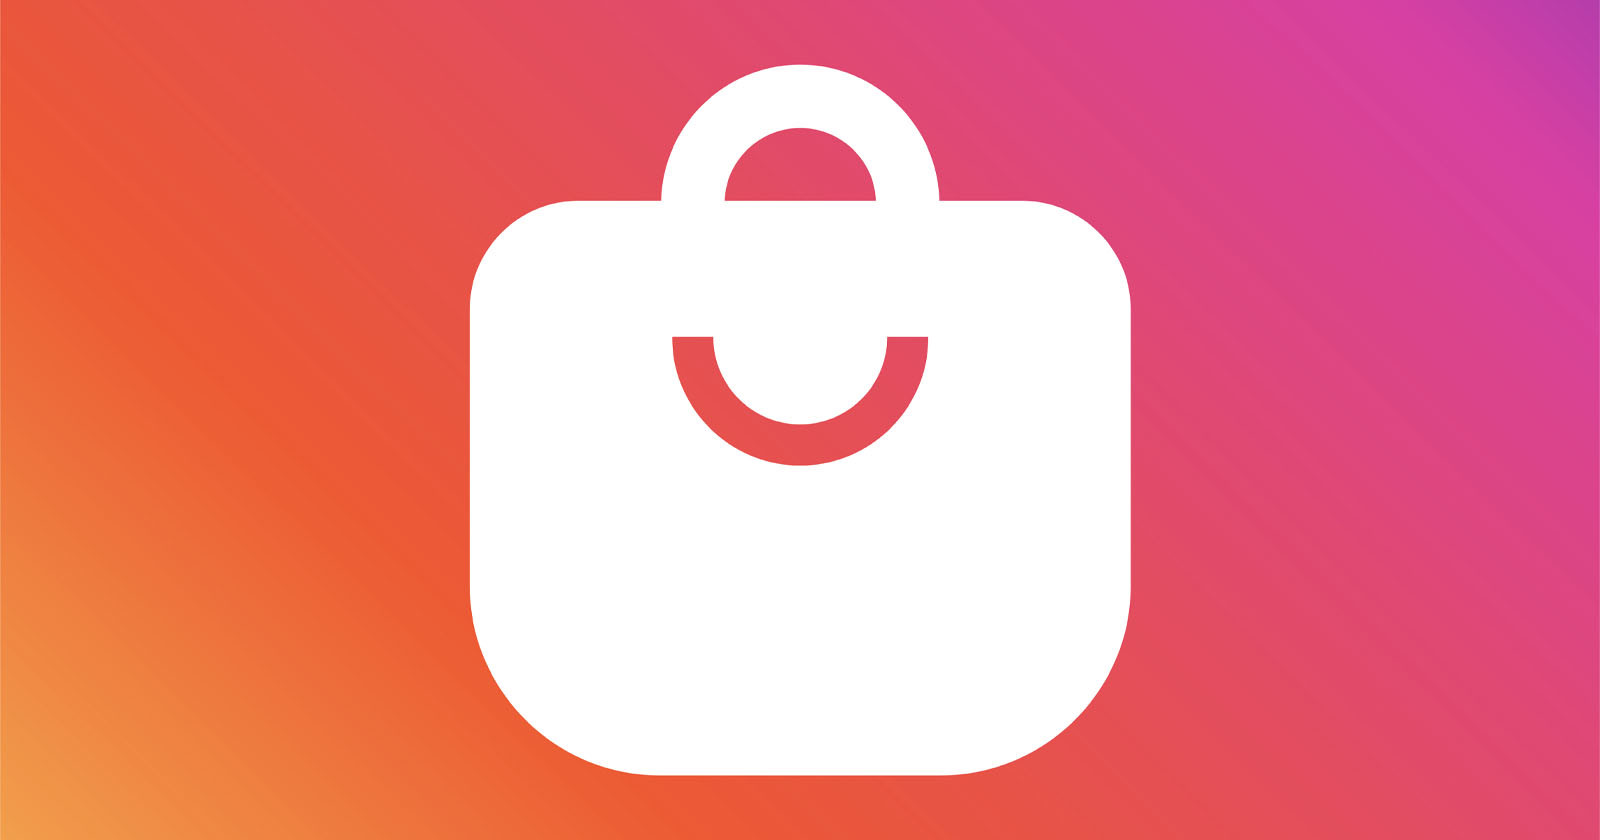  instagram remove shopping tab focusing again content creation 